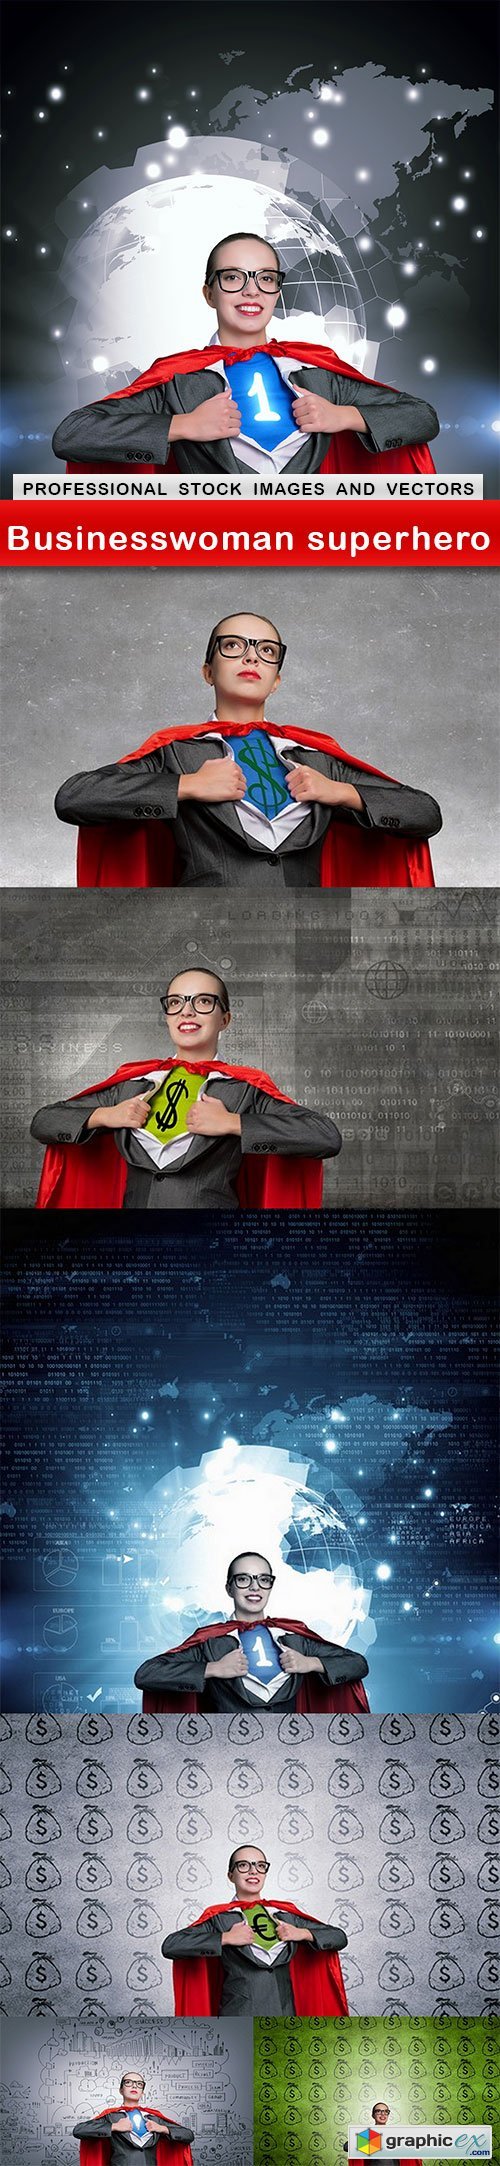 Businesswoman superhero - 7 UHQ JPEG